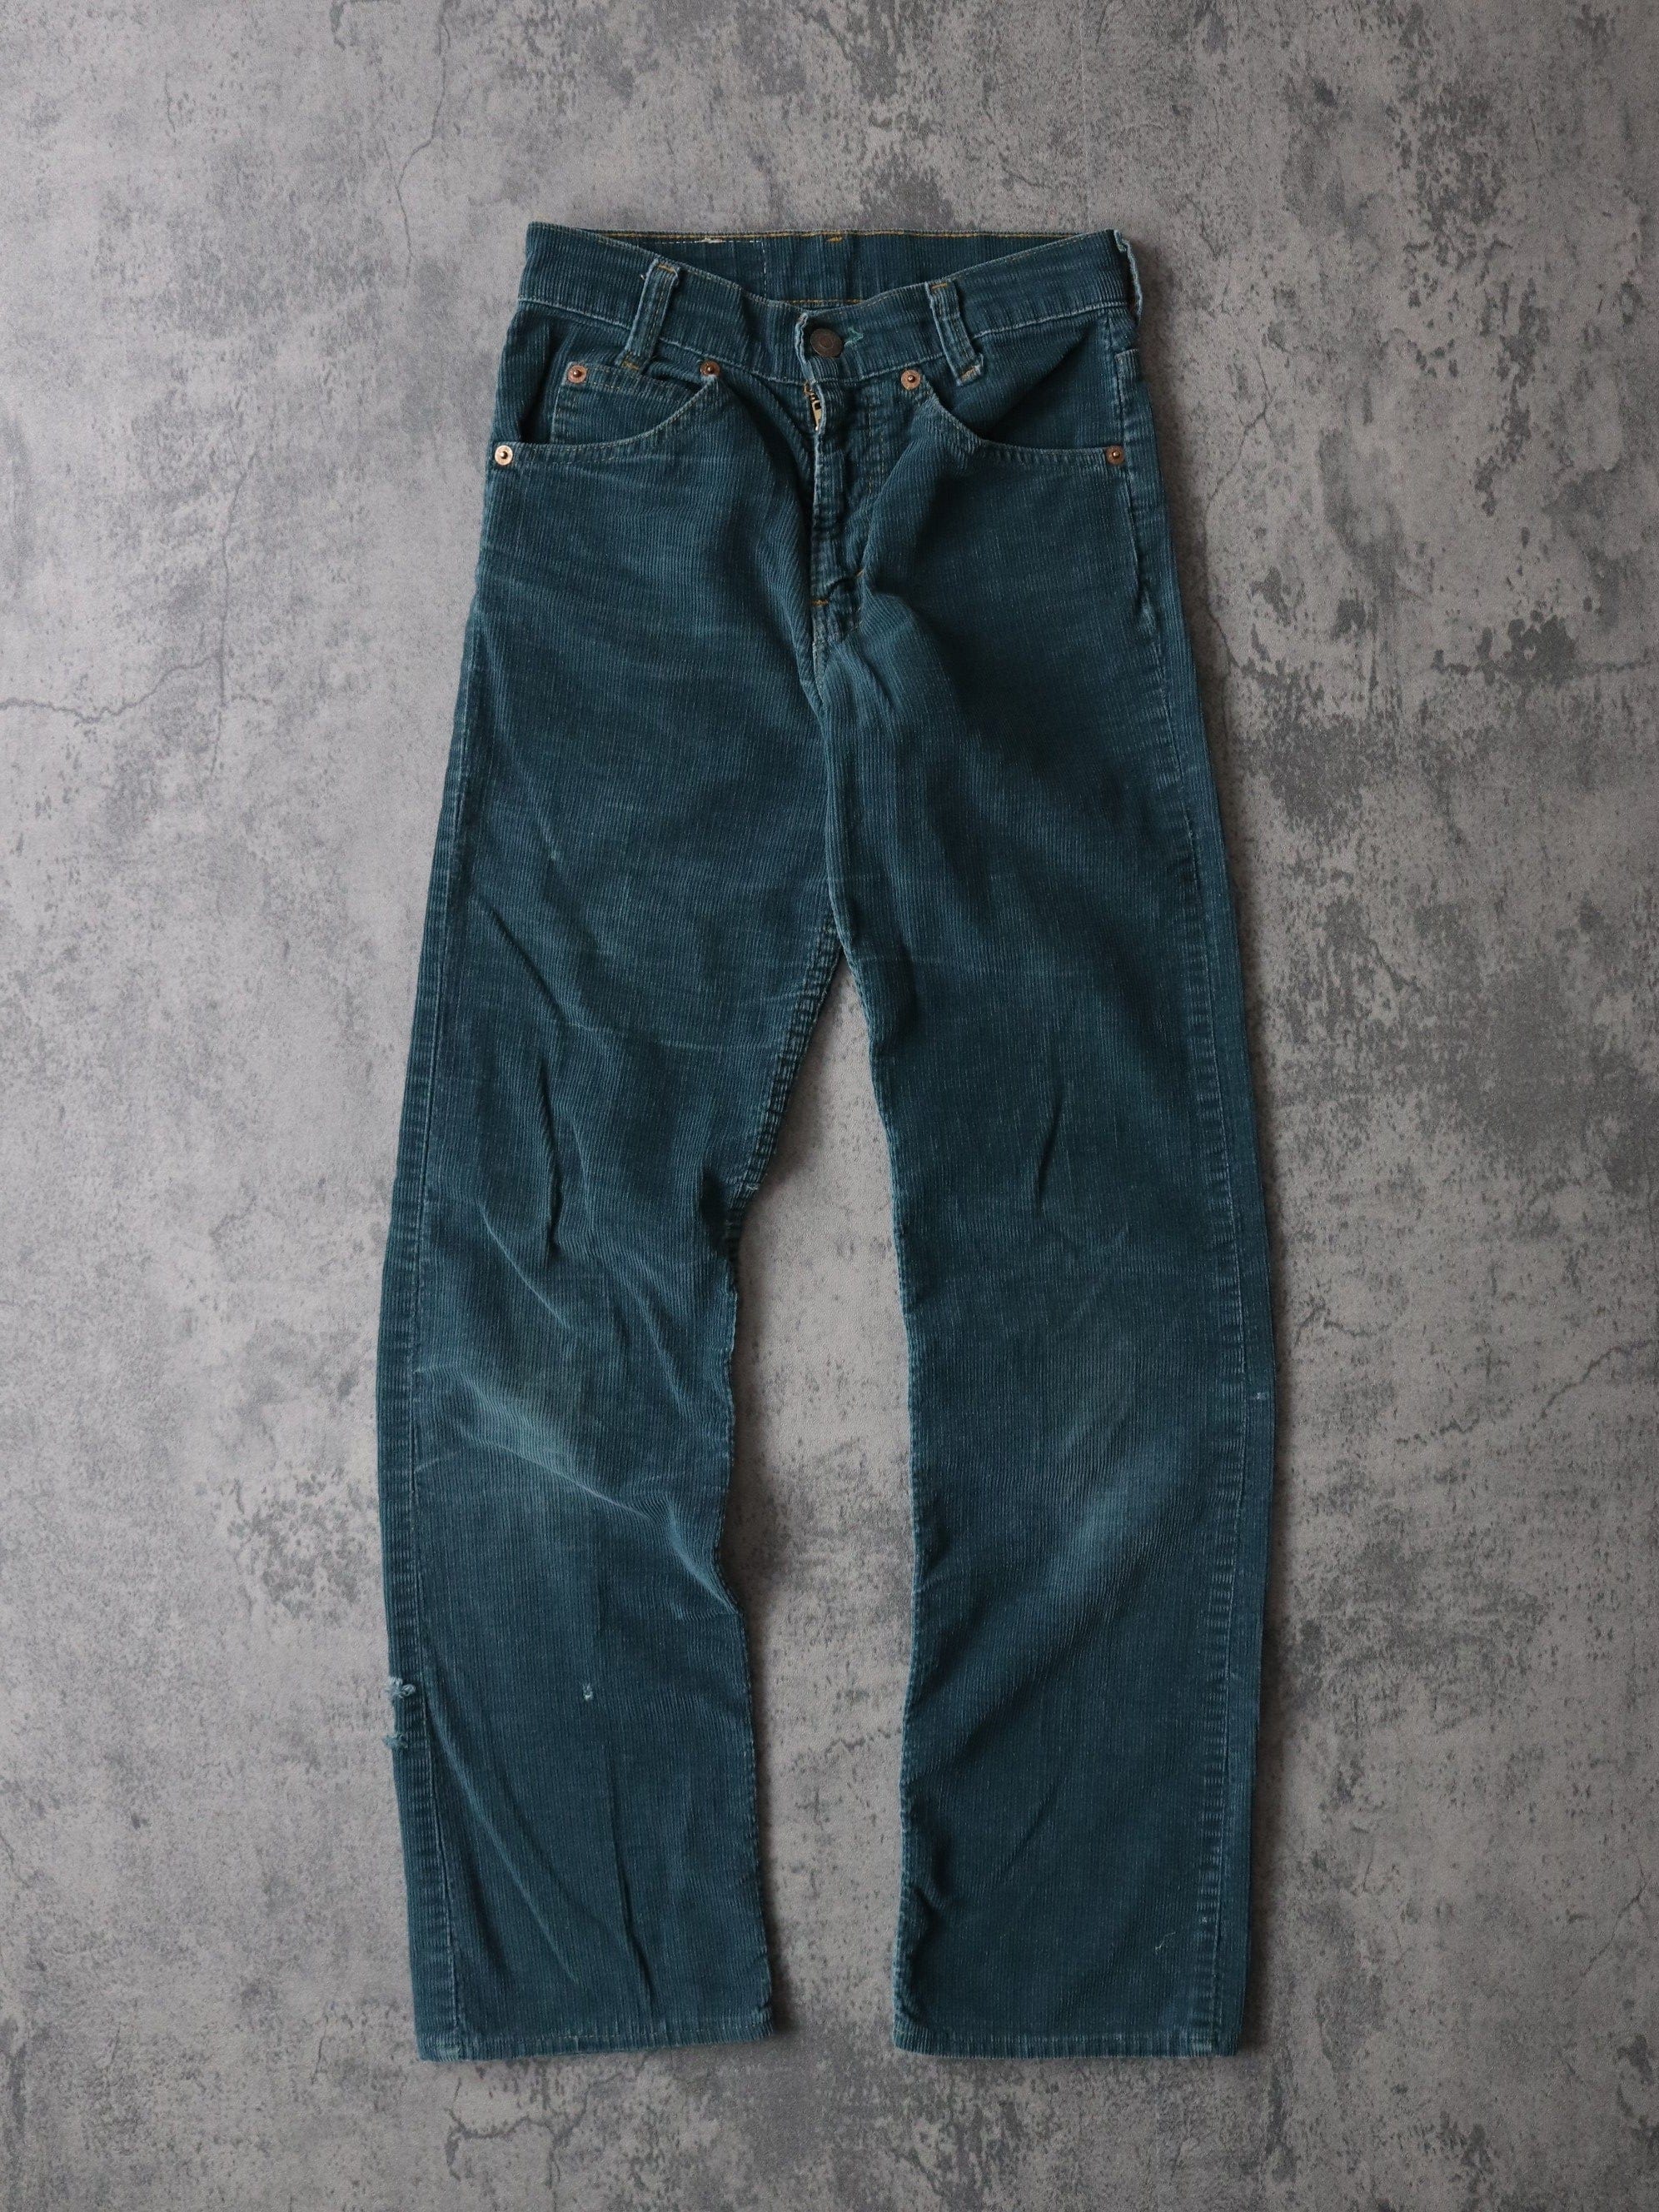 Vintage Levi's Pants Fits Womens 25 x 29 Green Corduroy 80s Talon Zip –  Proper Vintage